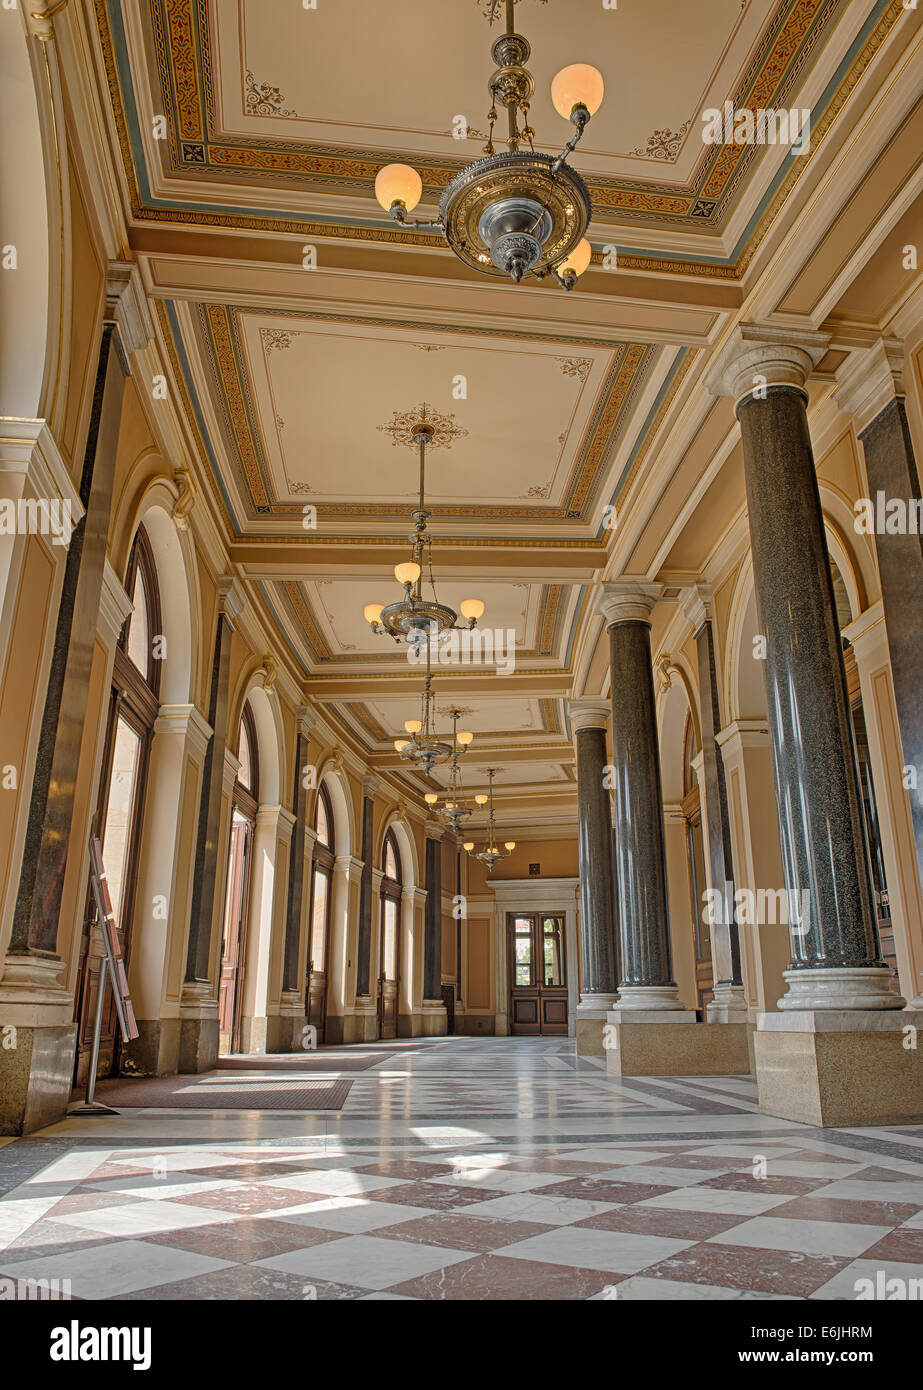 PRAGUE, CZECH REPUBLIC - AUGUST 15, 2014: Lobby of Rudolfinum, a music auditorium and home of the Czech Philharmonic Orchestra i Stock Photo